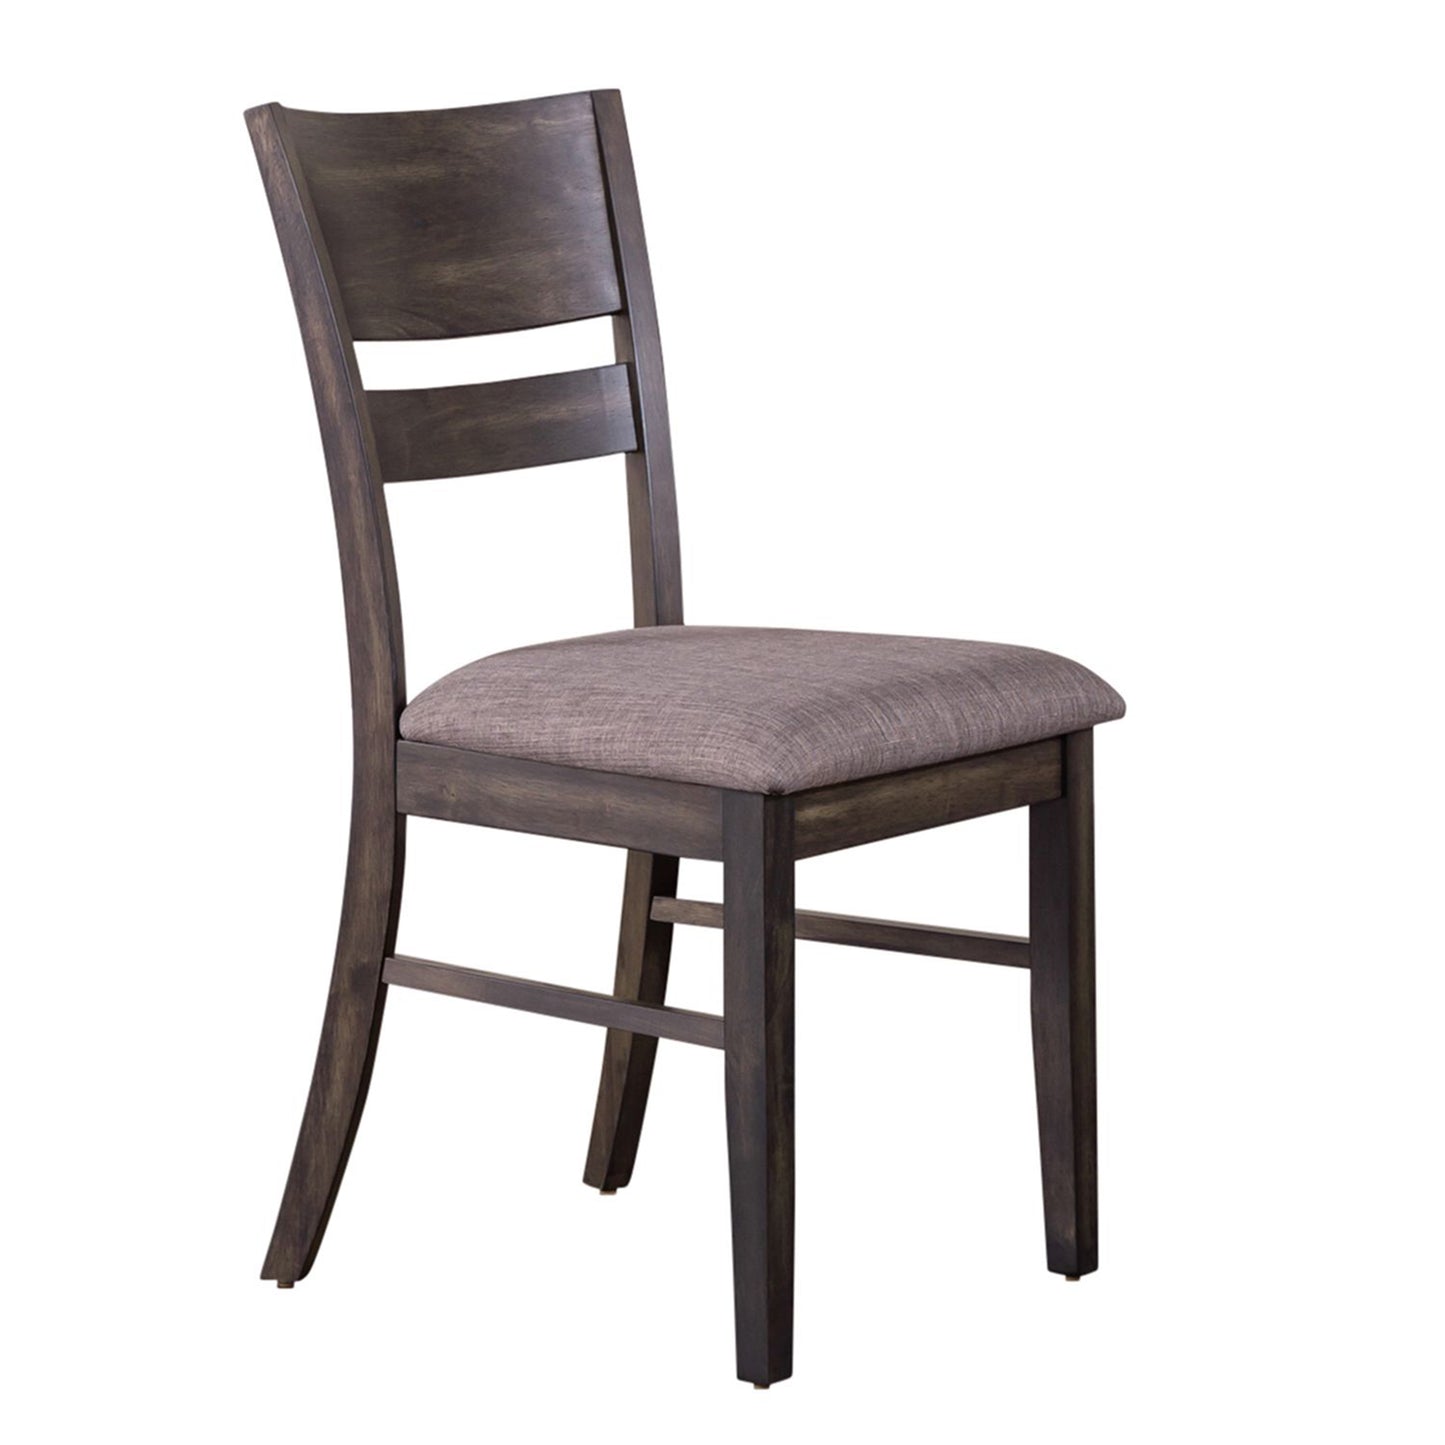 Almeta Solid Wood Slat Back Upholstered Dining Chairs, Set of 2 -Dark Umber Brown Finish